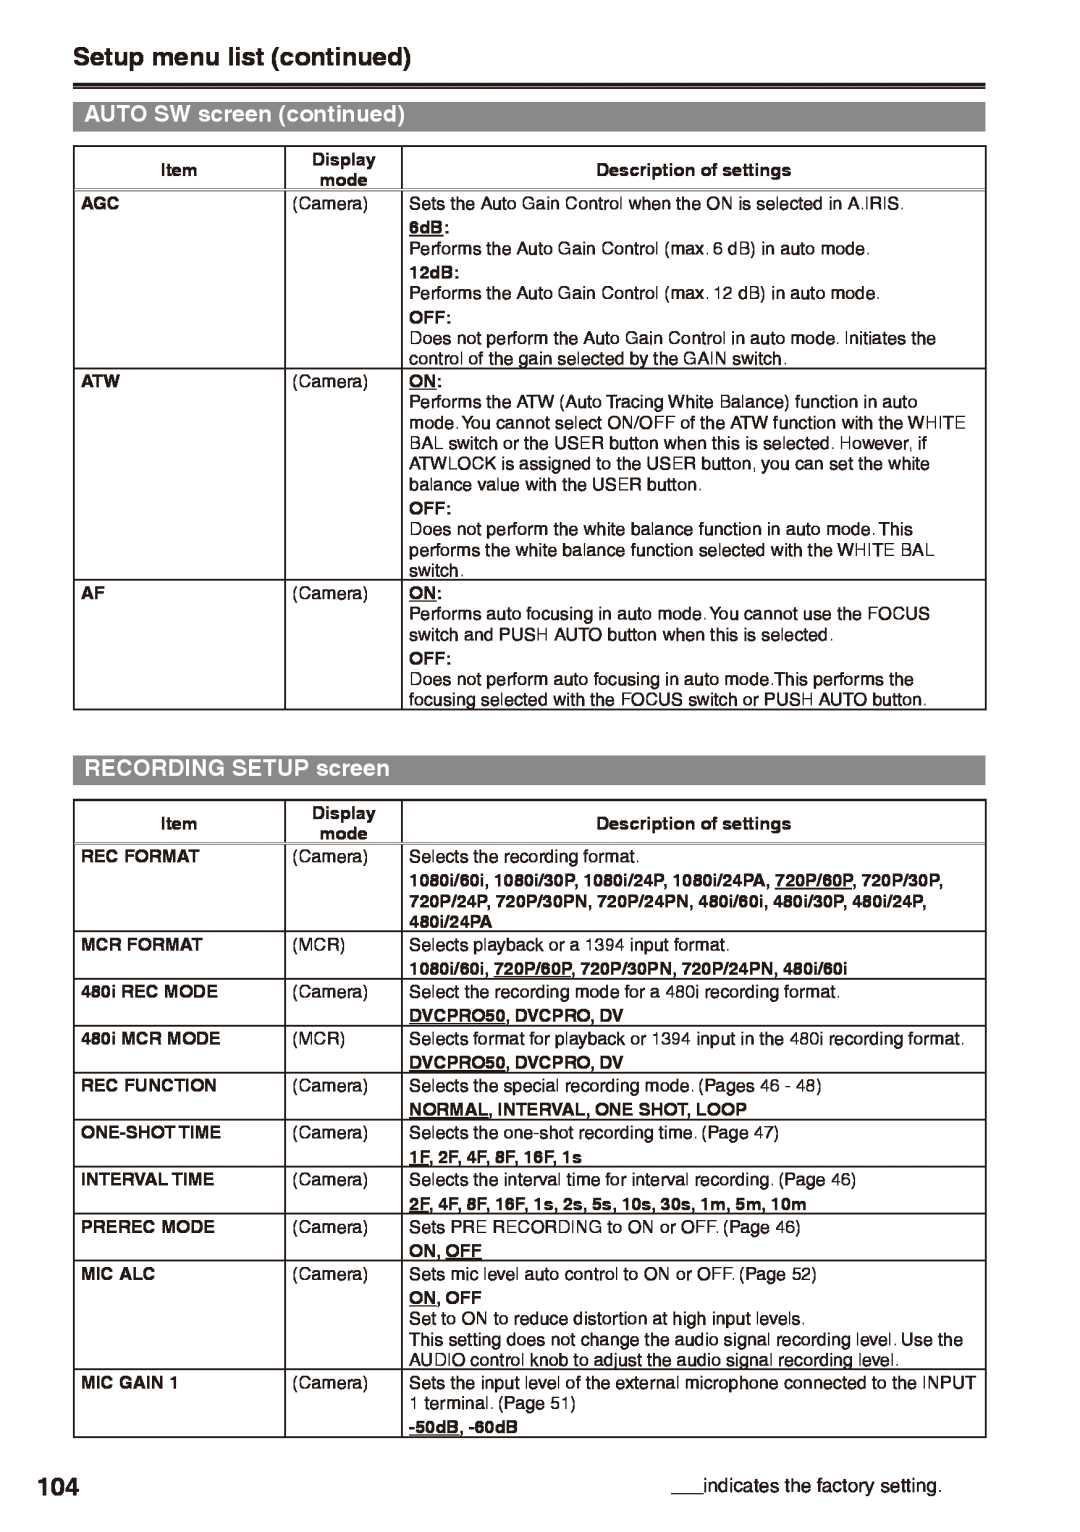 Panasonic AG-HPX170 manual AUTO SW screen continued, RECORDING SETUP screen, Setup menu list continued 